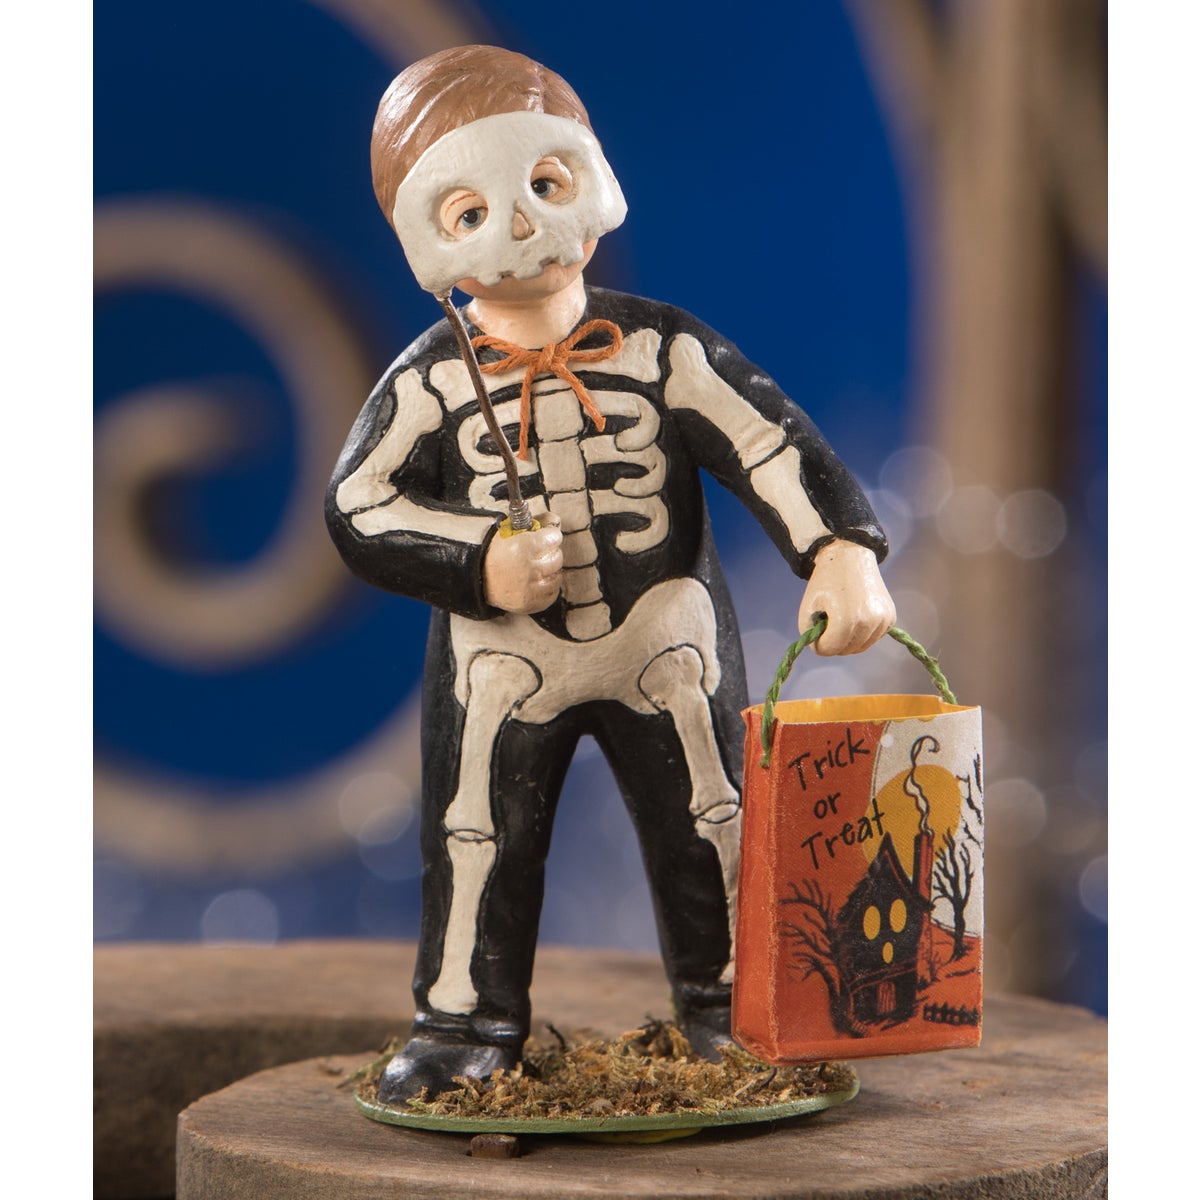 Grim Skeleton Boy